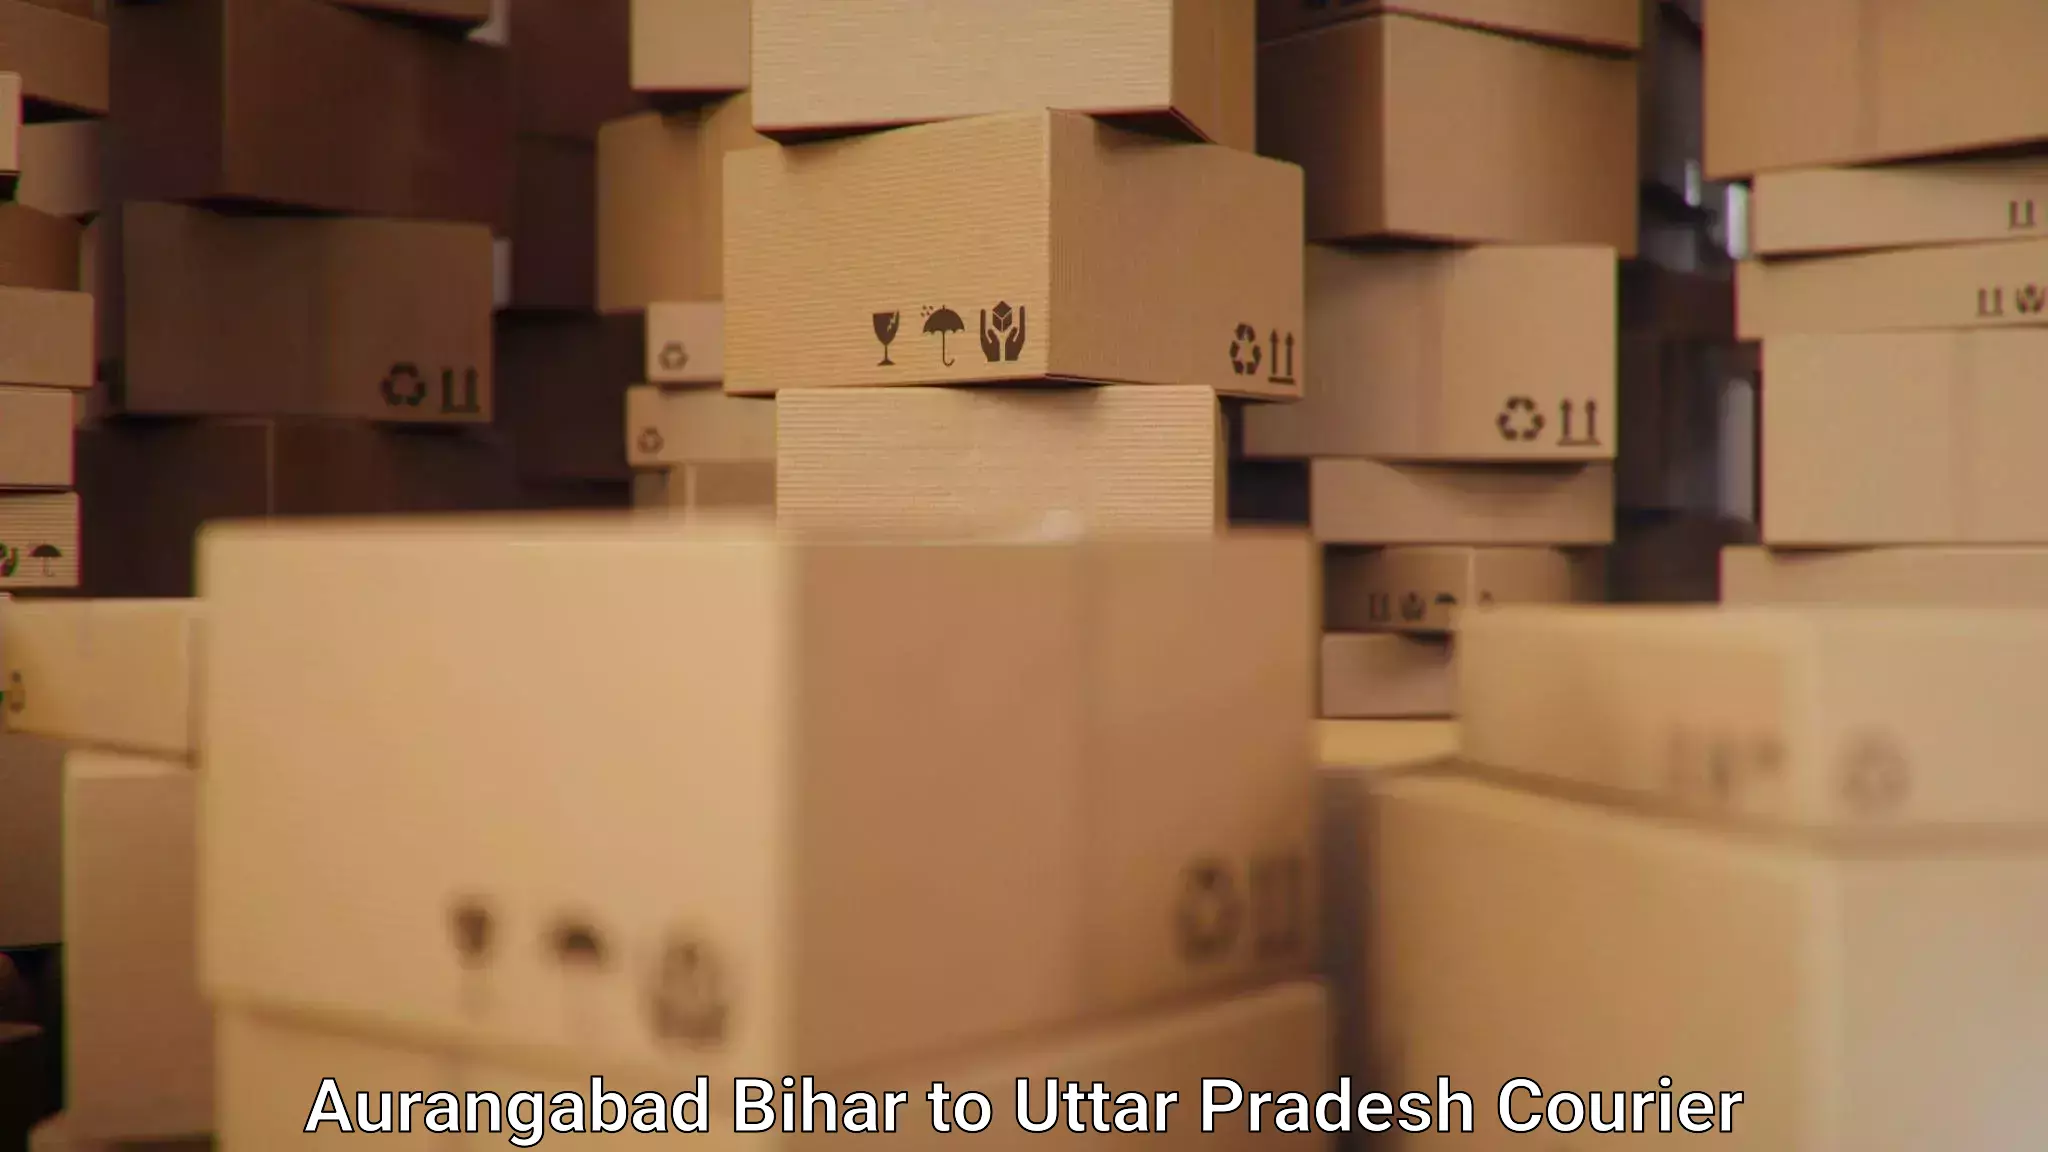 Efficient shipping platforms Aurangabad Bihar to Uttar Pradesh